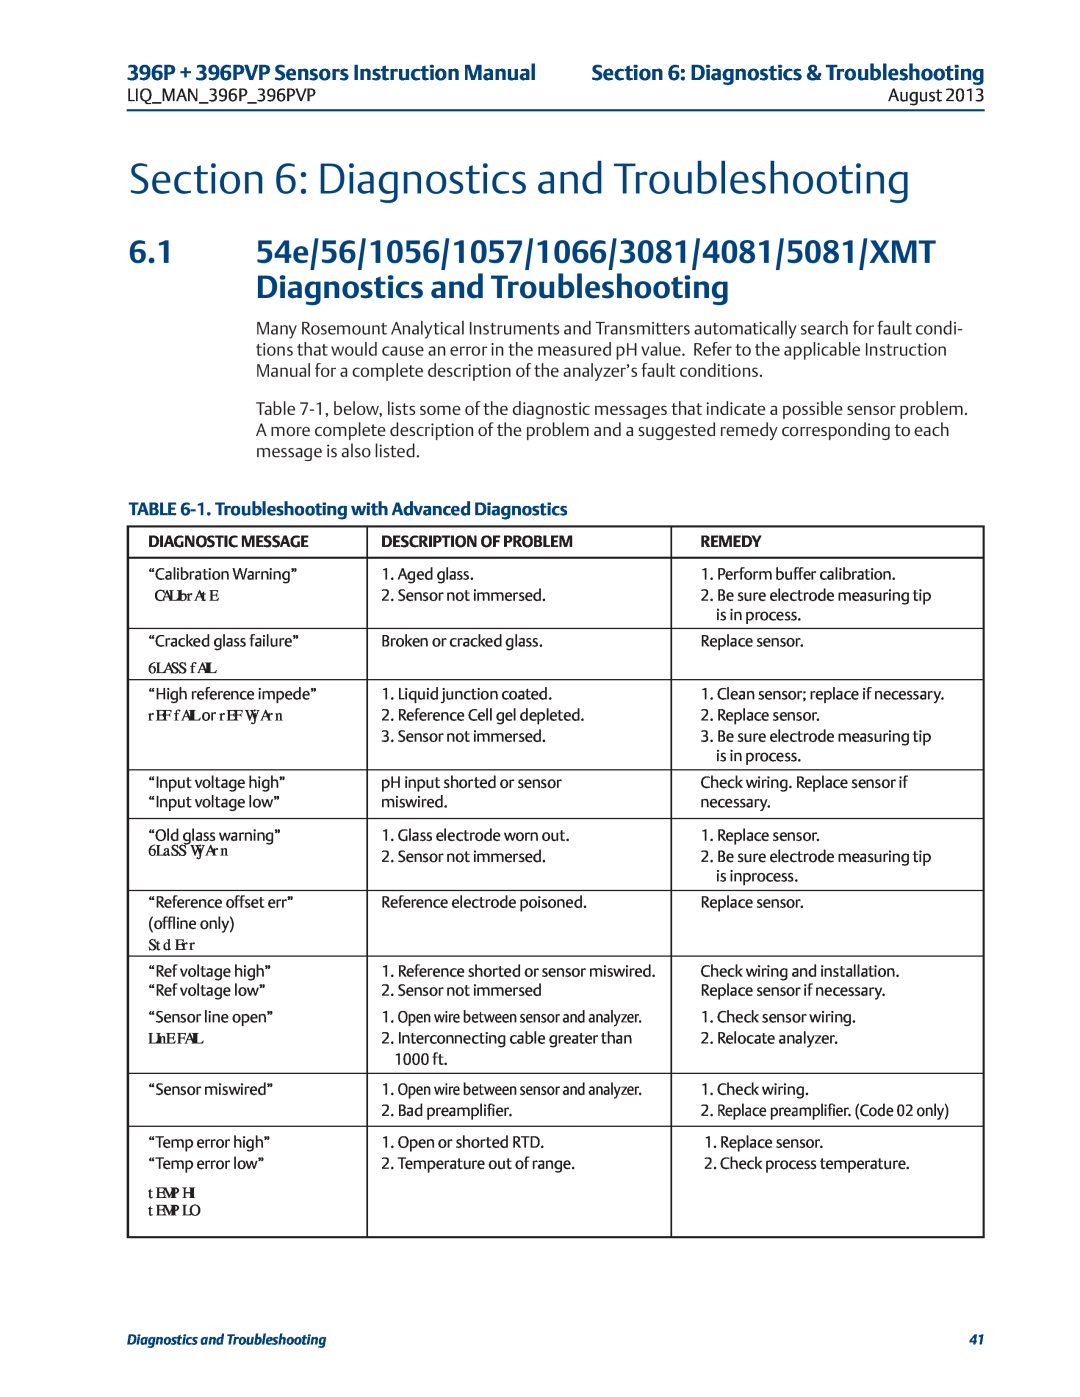 Emerson 396PVP instruction manual Diagnostics and Troubleshooting, Diagnostics & Troubleshooting 